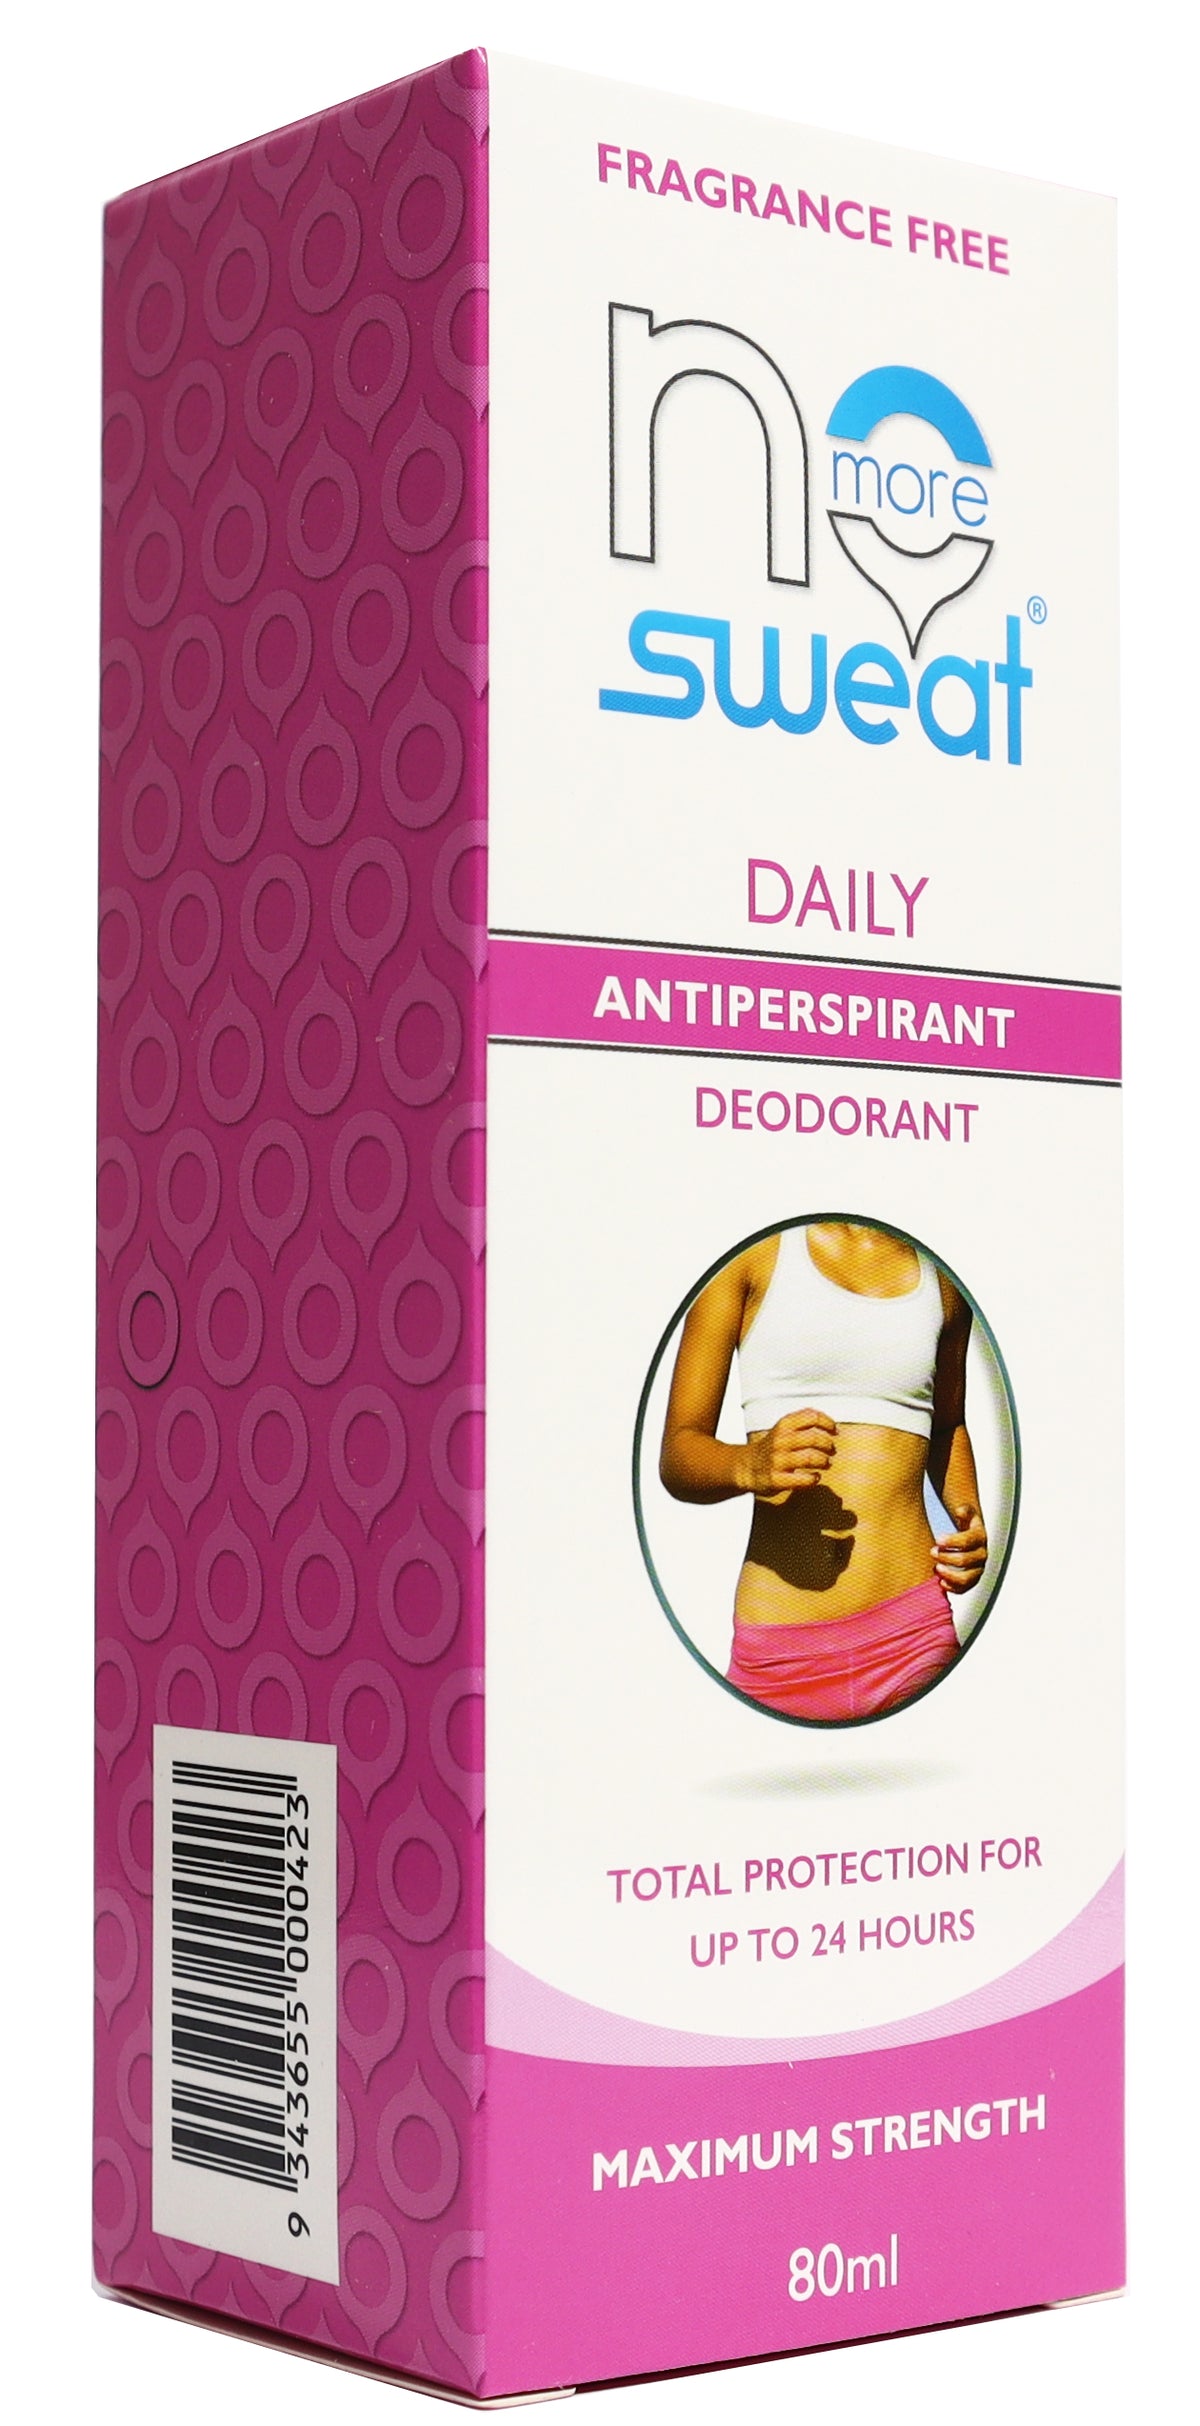 NMS Women’s Daily Deodorant